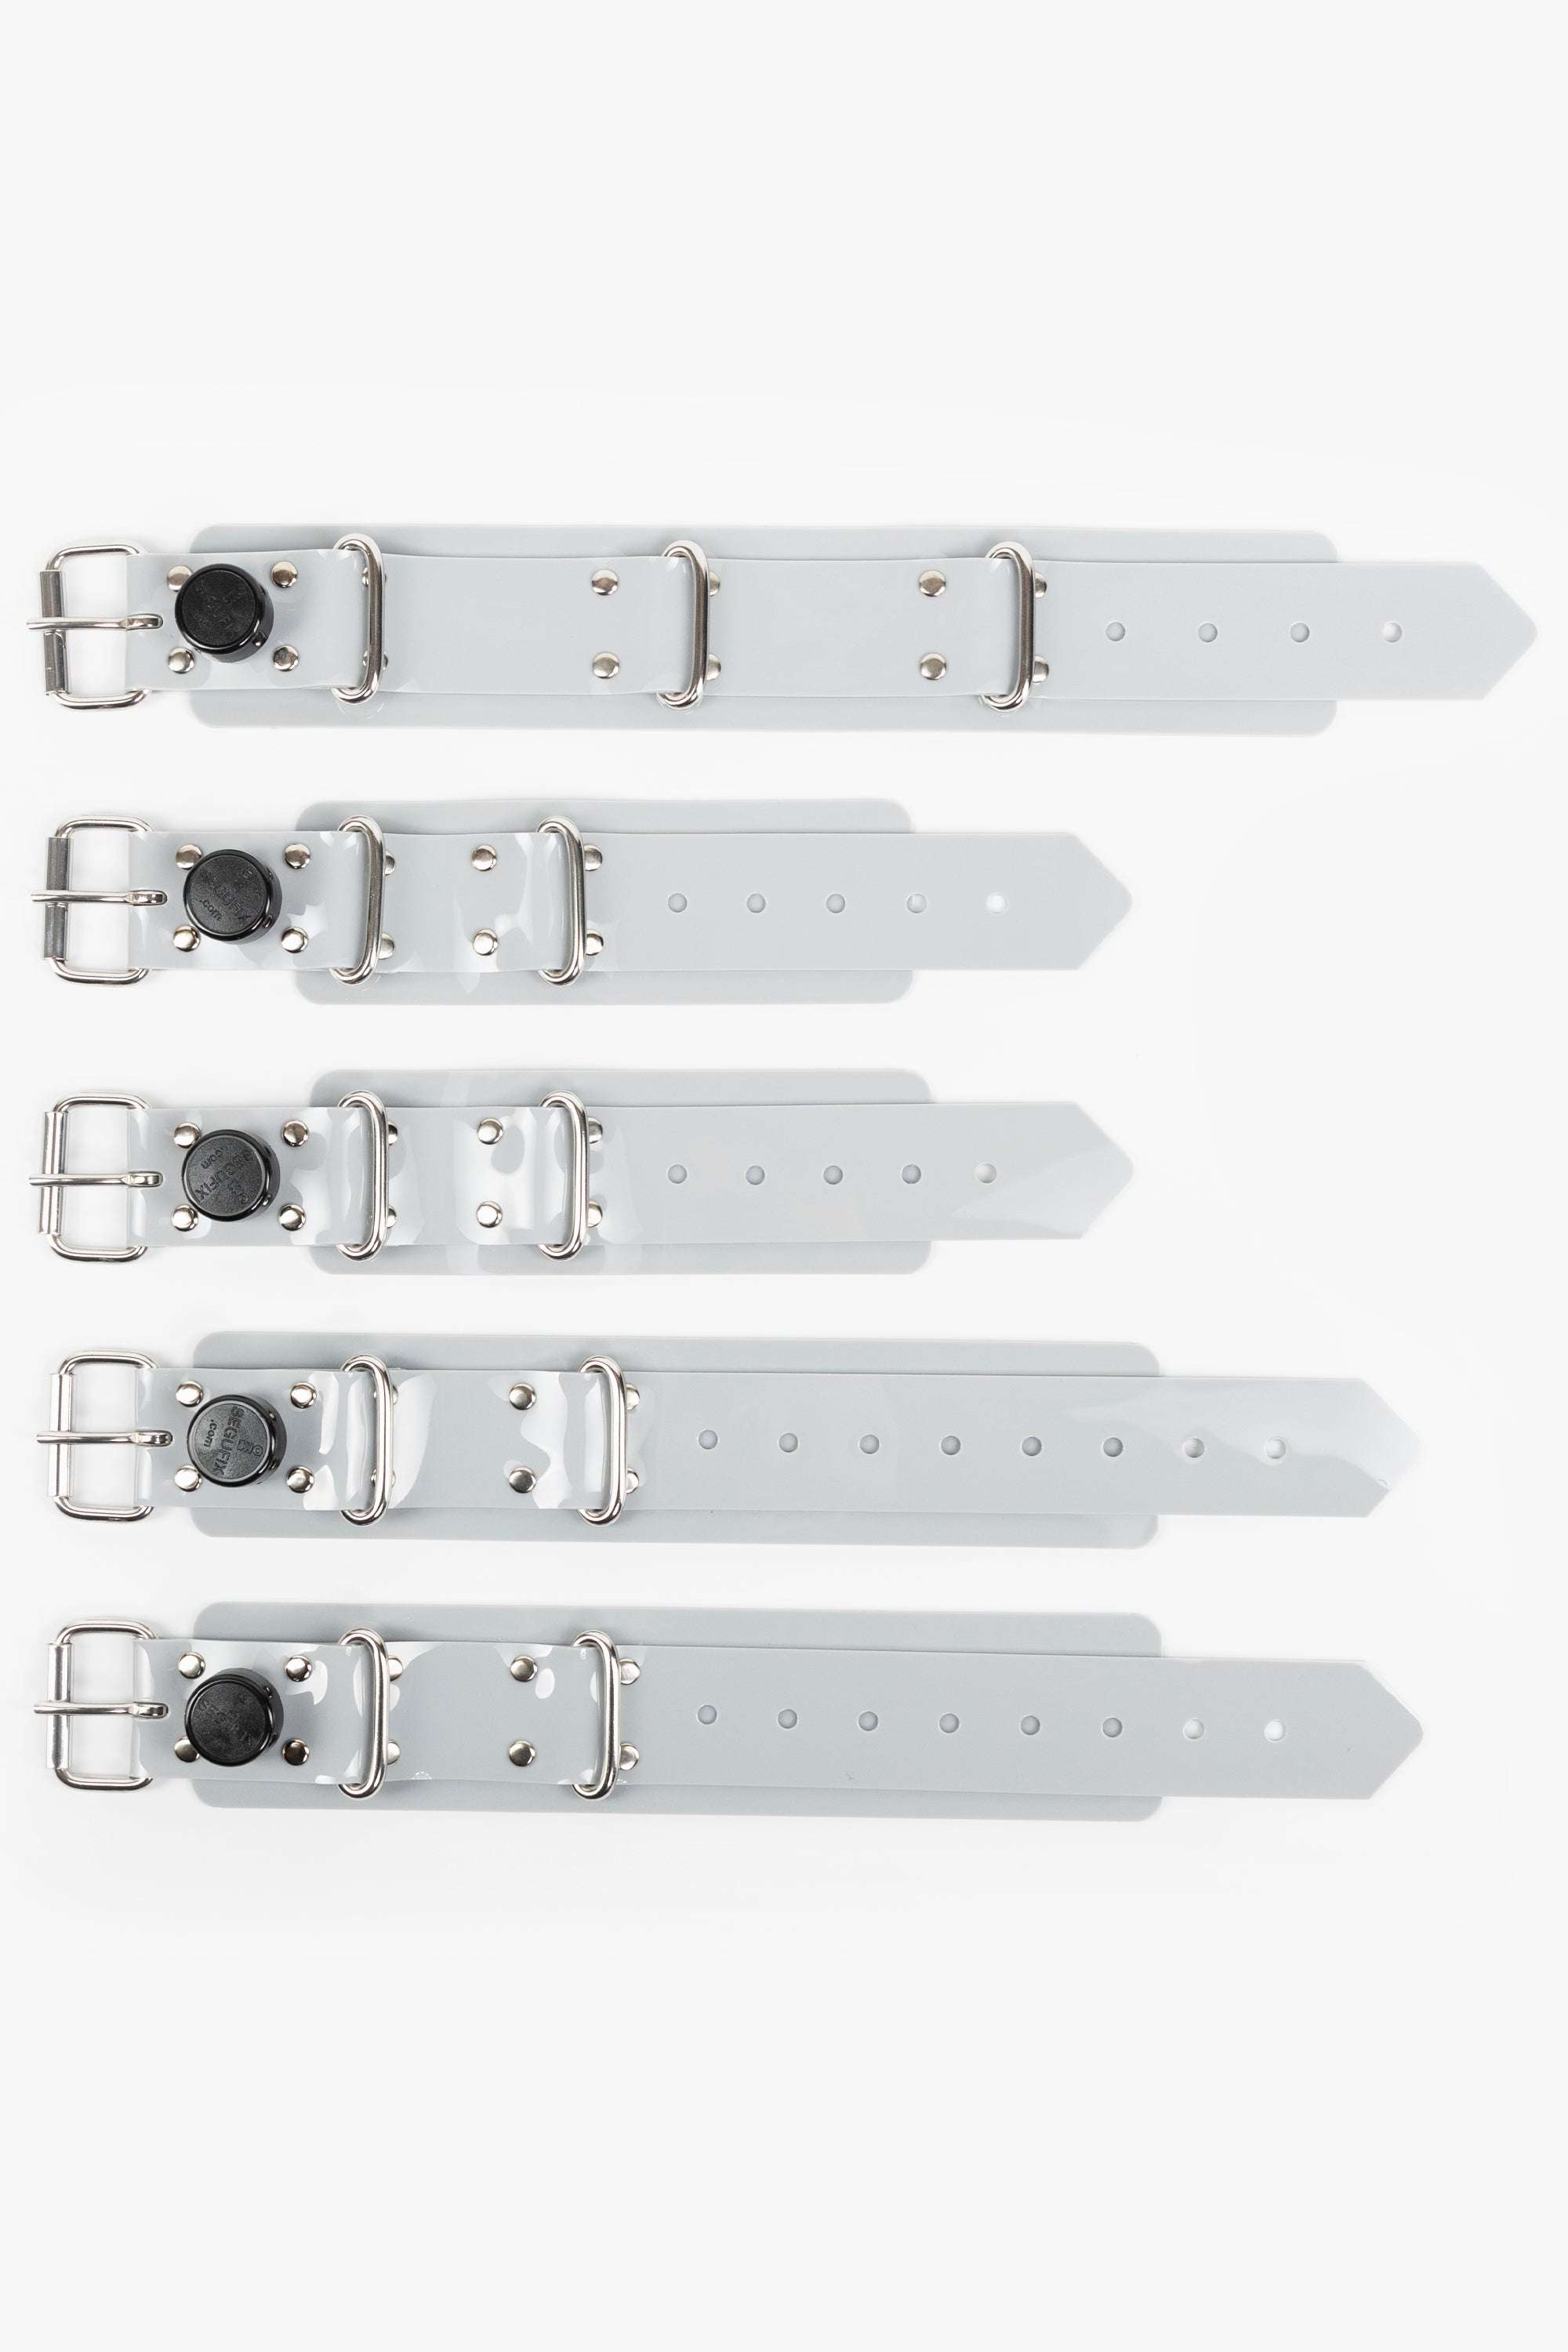 Full body lockable segufix restraints set, light grey/chrome